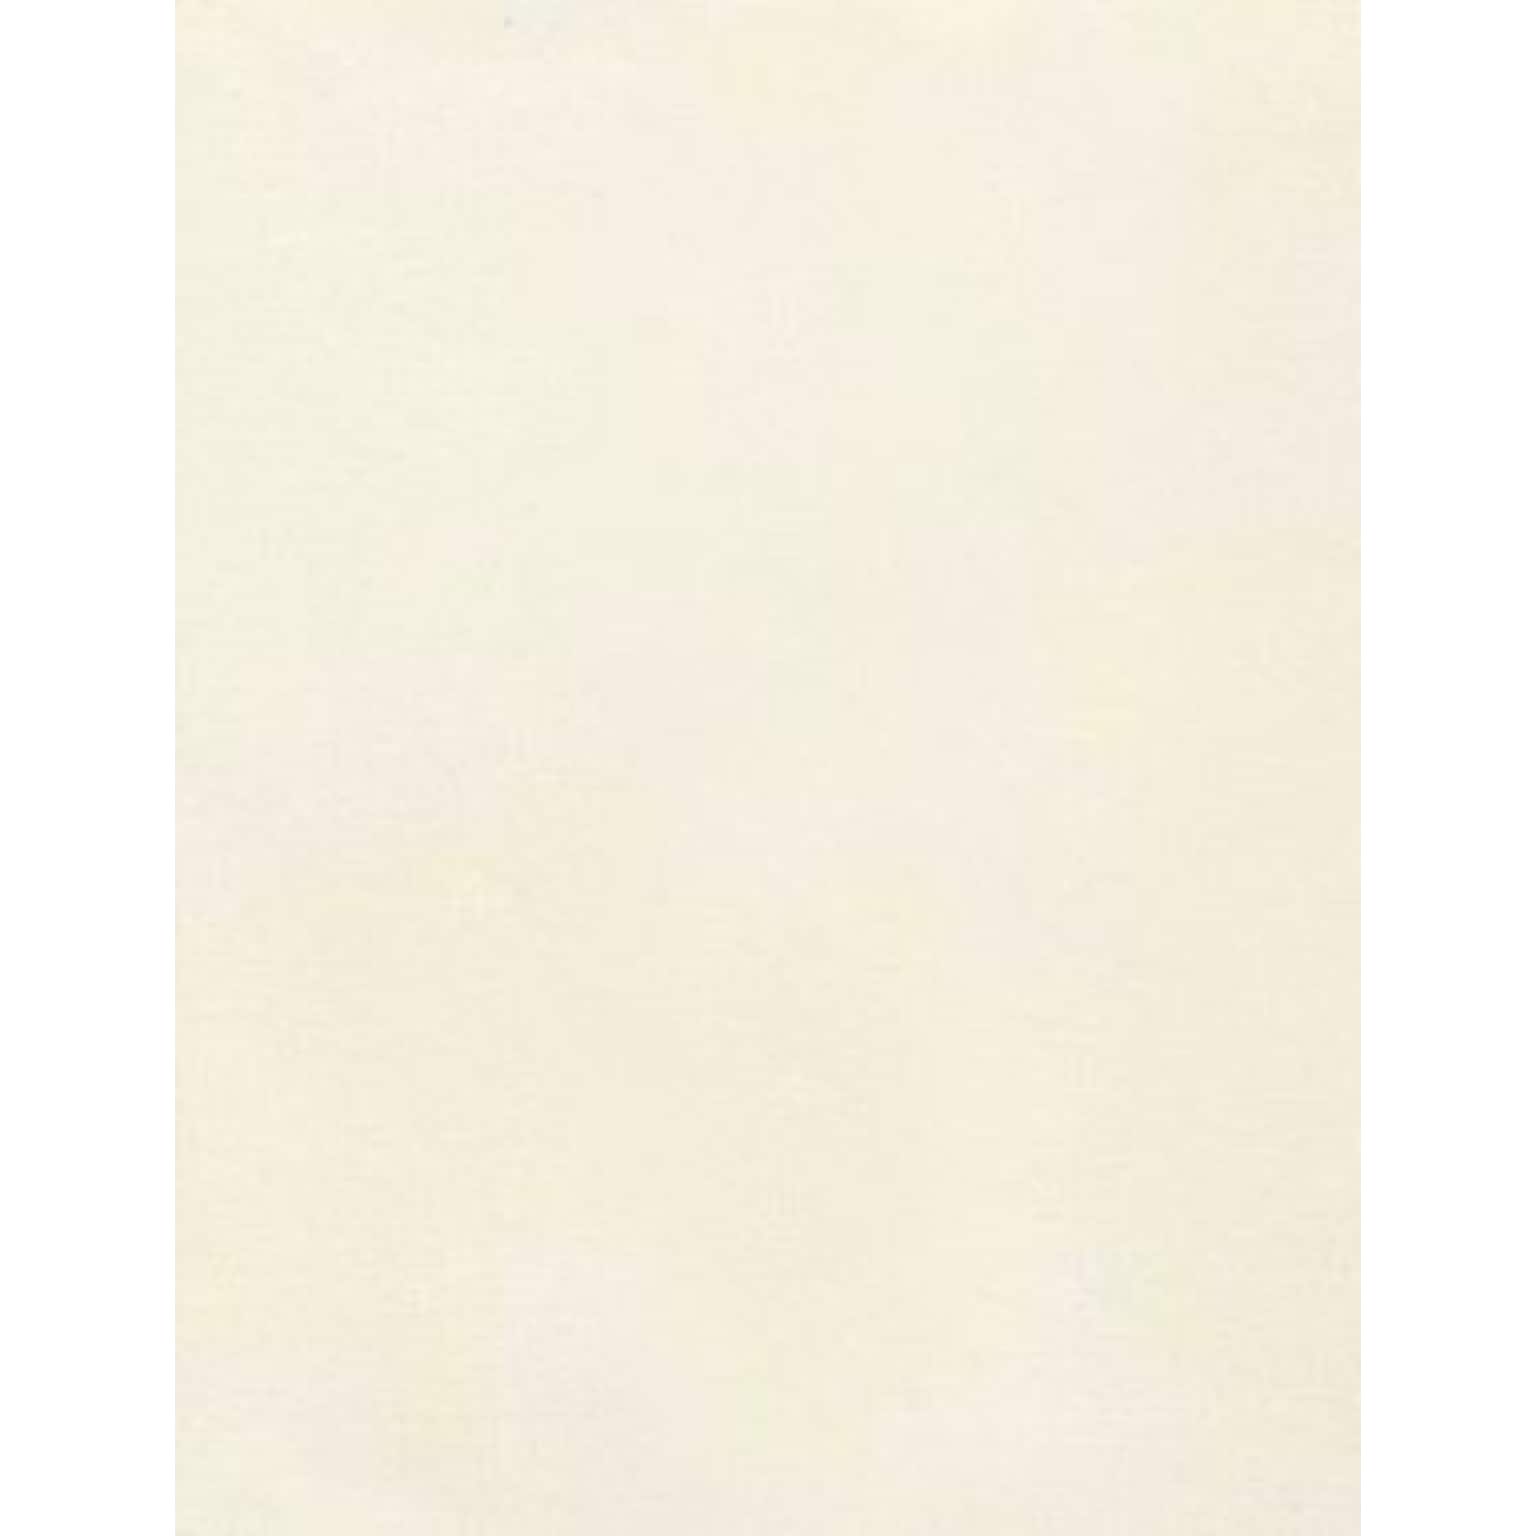 LUX Linen 100 lb. Cardstock Paper, 11 x 17, Natural Linen, 250 Sheets/Ream (1117-C-NLI-250)